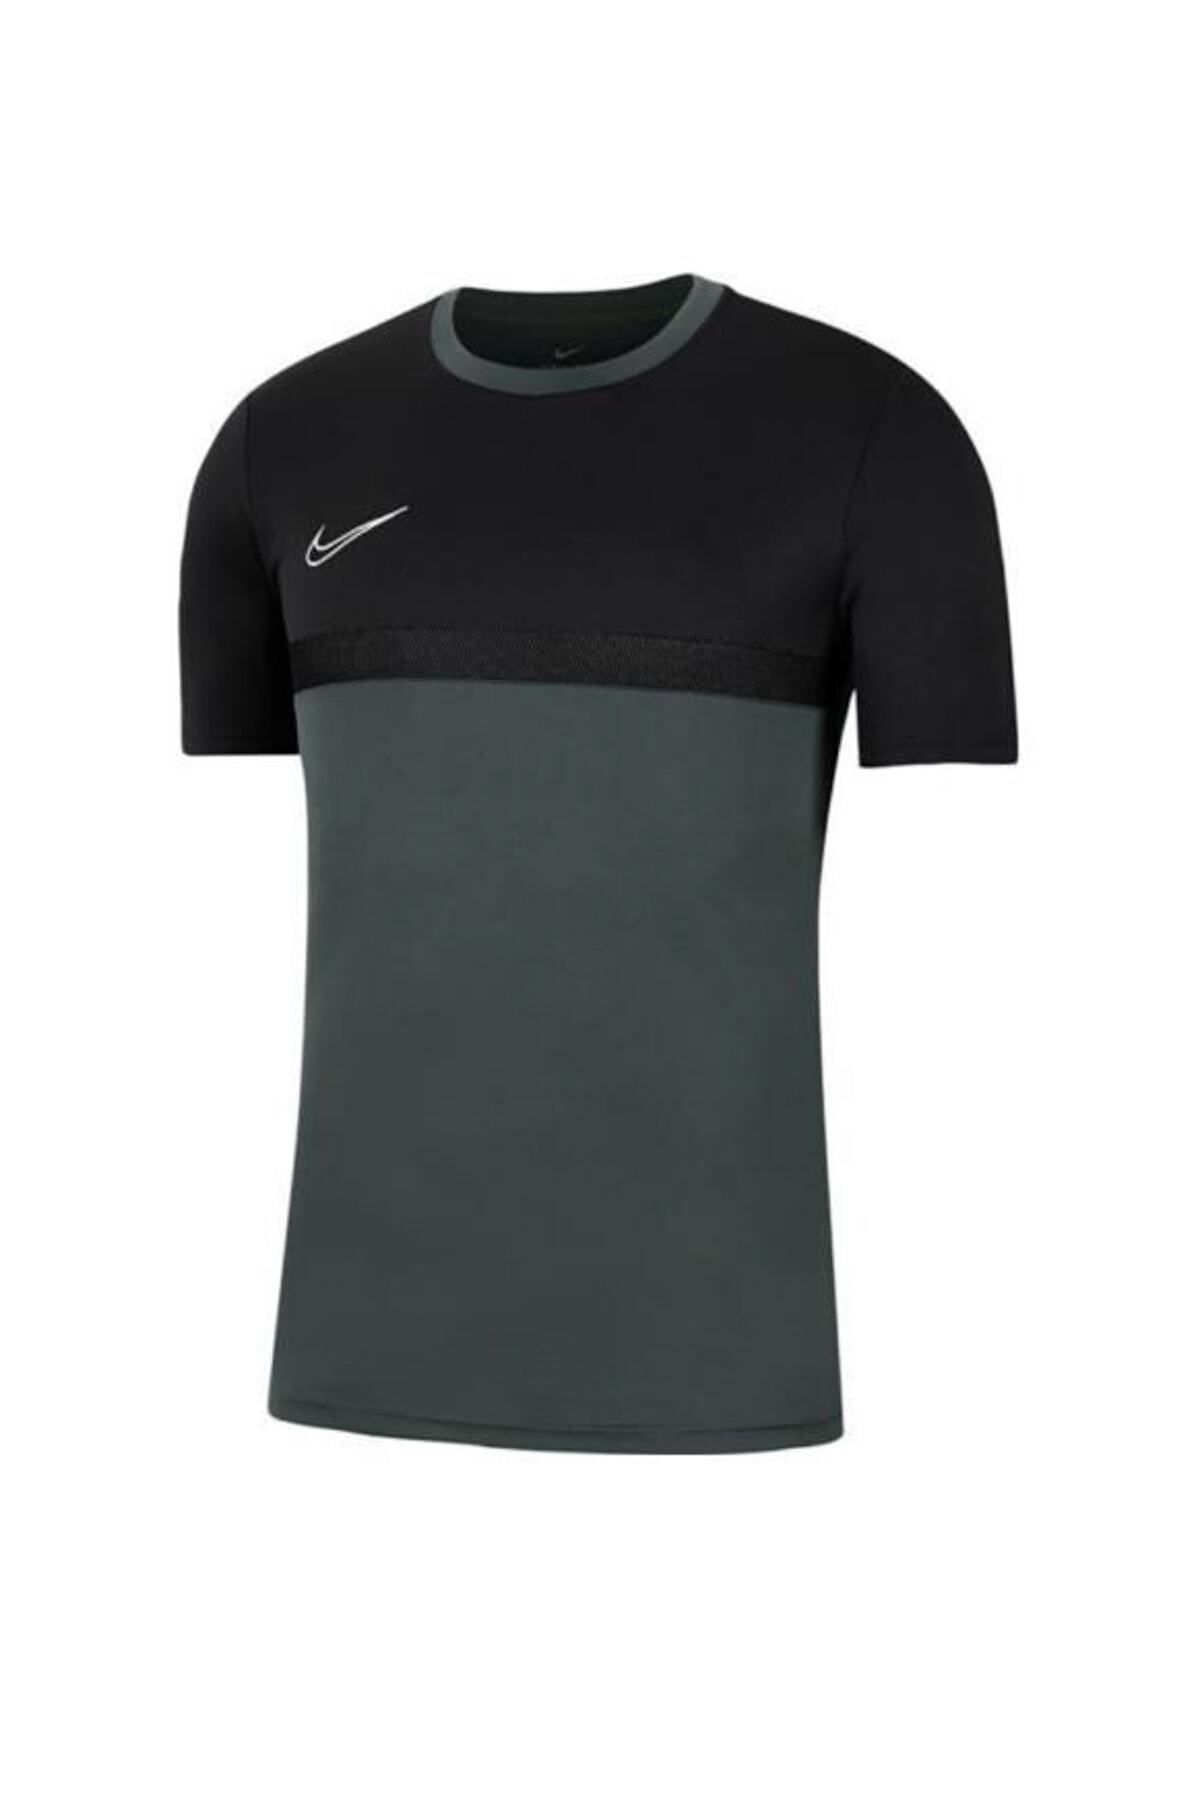 Nike Bv6926-073 M Nk Df Acdpr Top Ss Erkek T-shirt